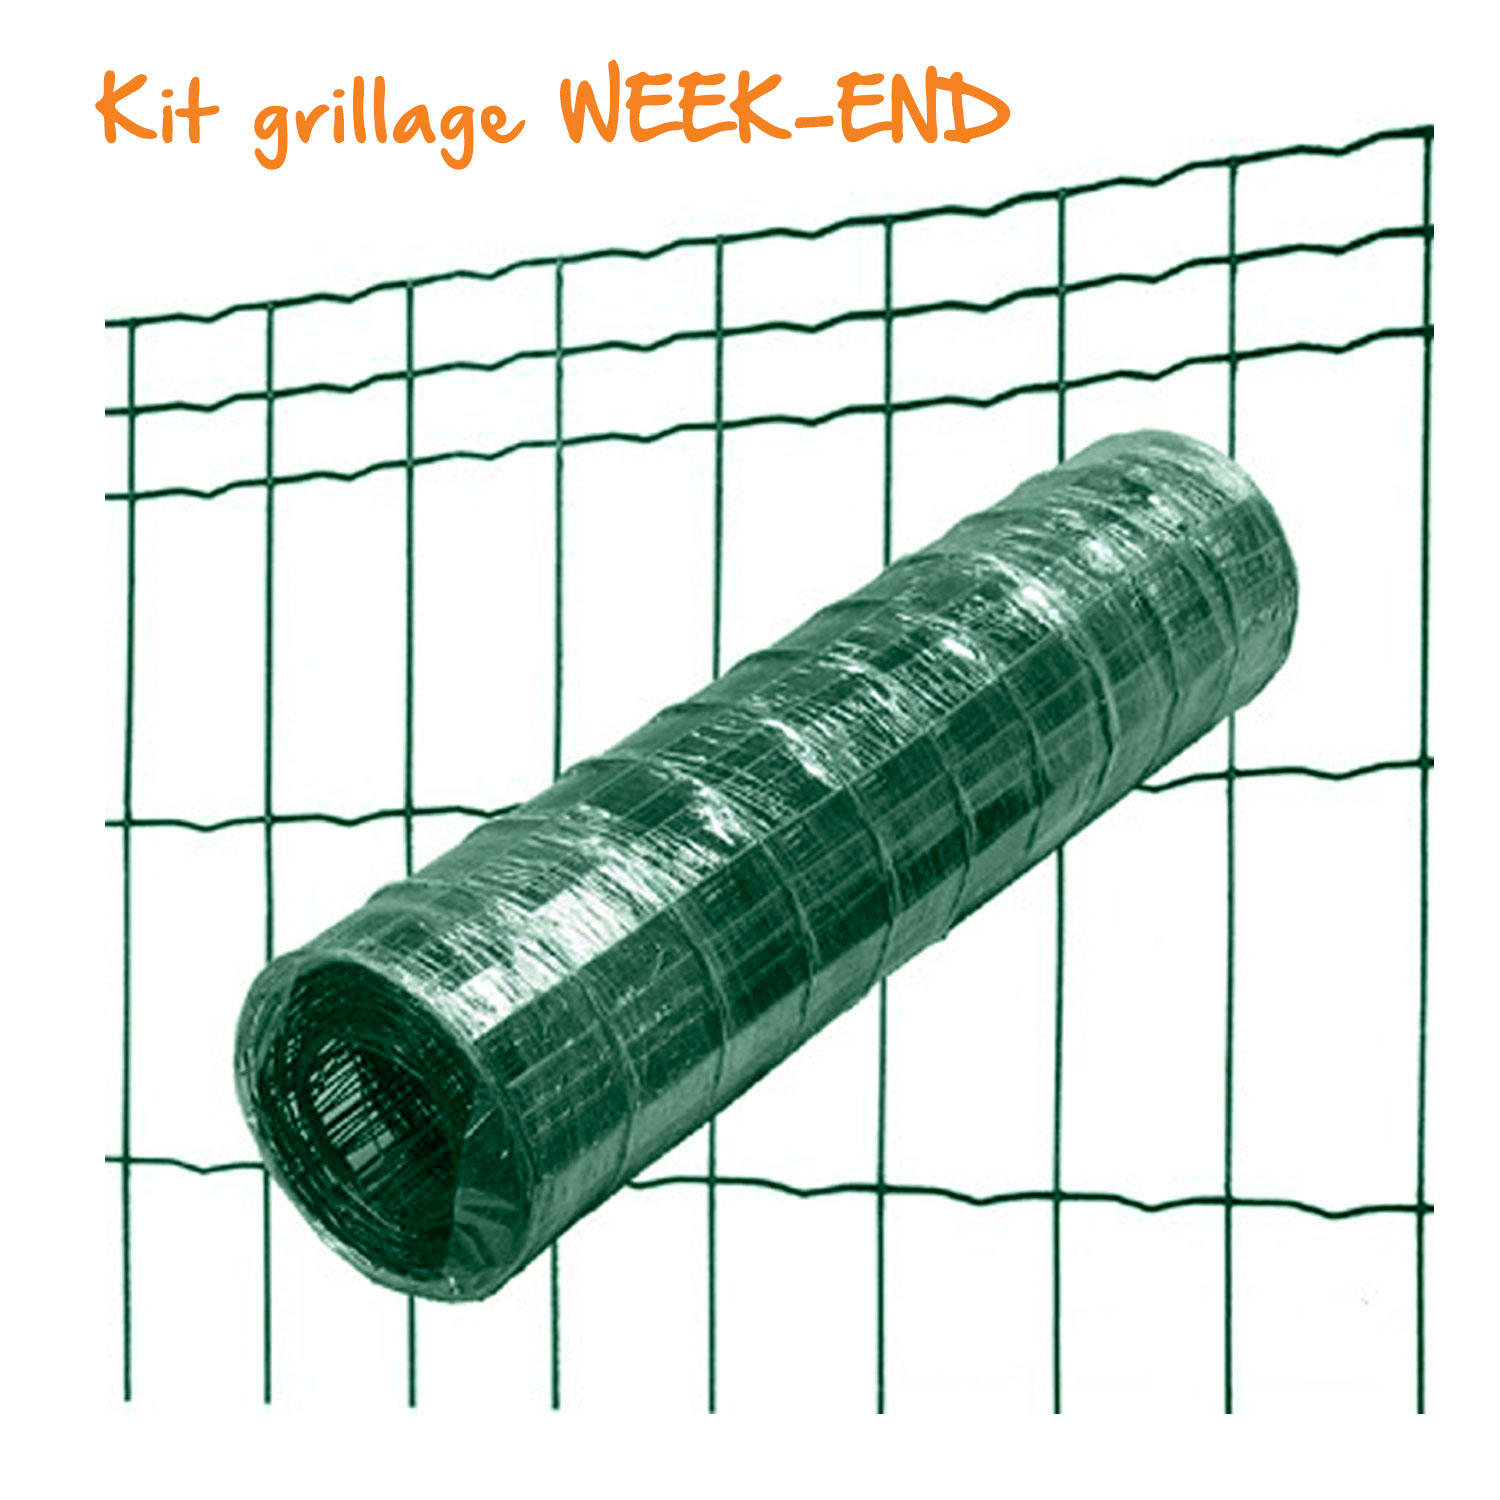 Kit grillage soudé WEEK-END 100 x 50 mm - Ø 2,5 mm - Lg. 25 m Vert